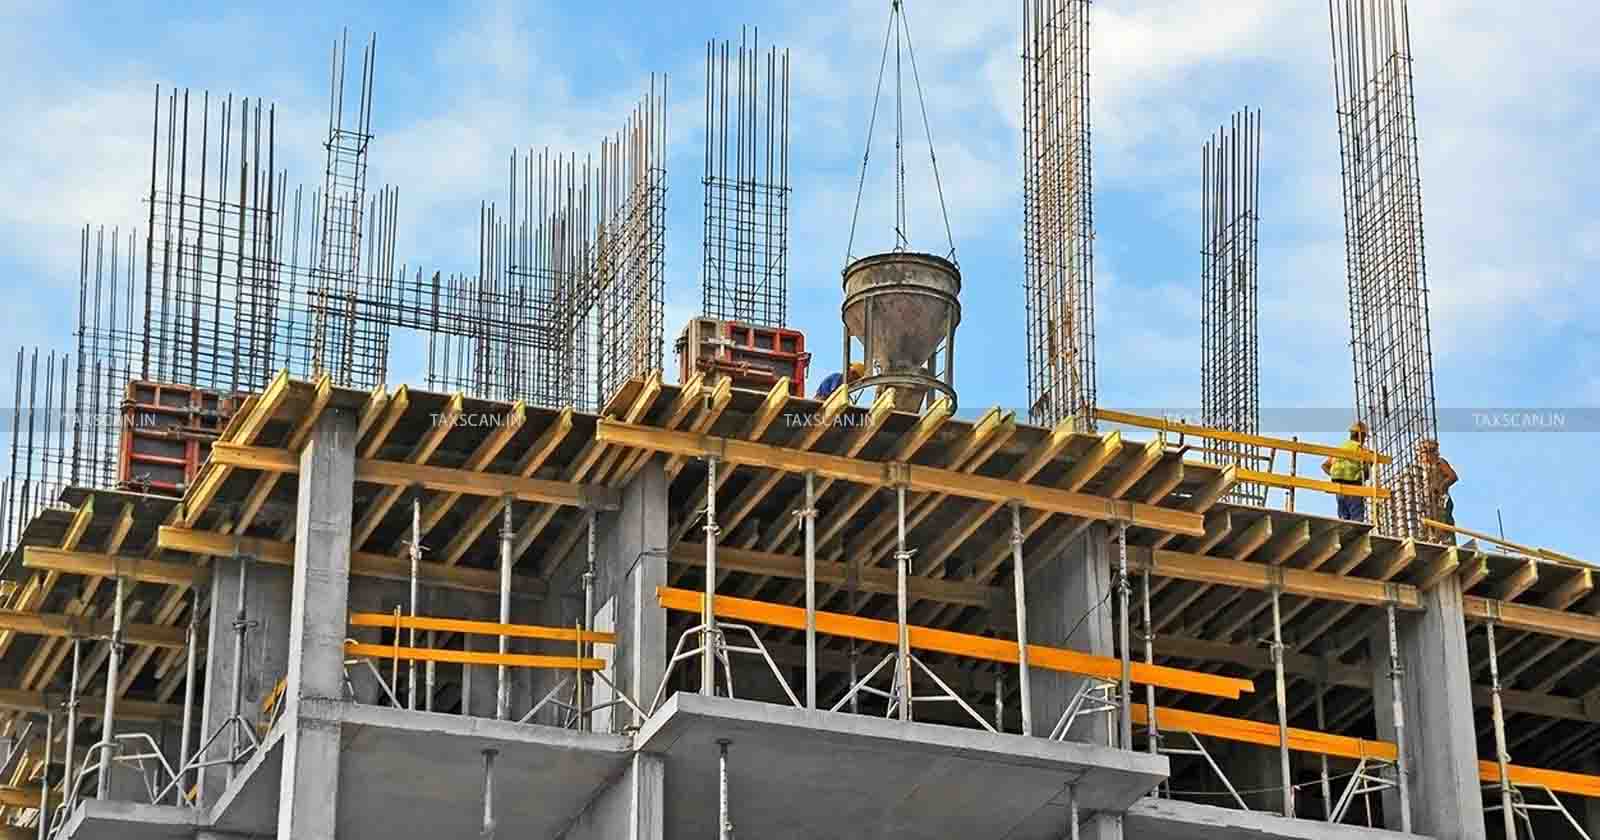 Construction Service - allahabad CESTAT - Commercial or Industrial Construction Service - service tax - tascan